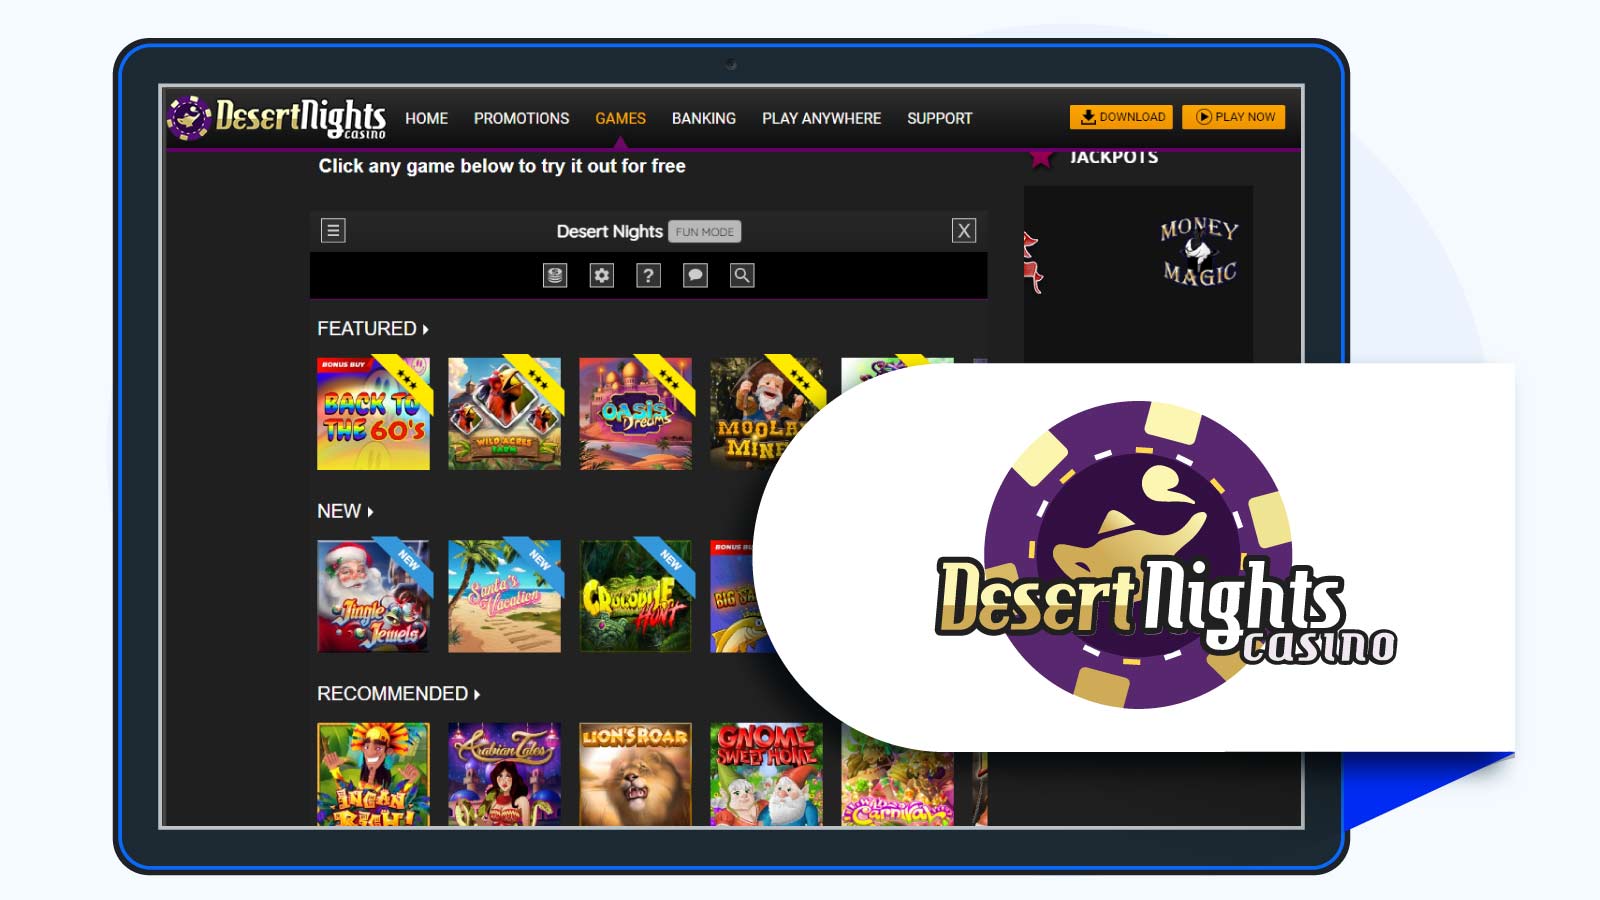 Desert Nights Casino Best Rated Online Casino for VIP Treatment